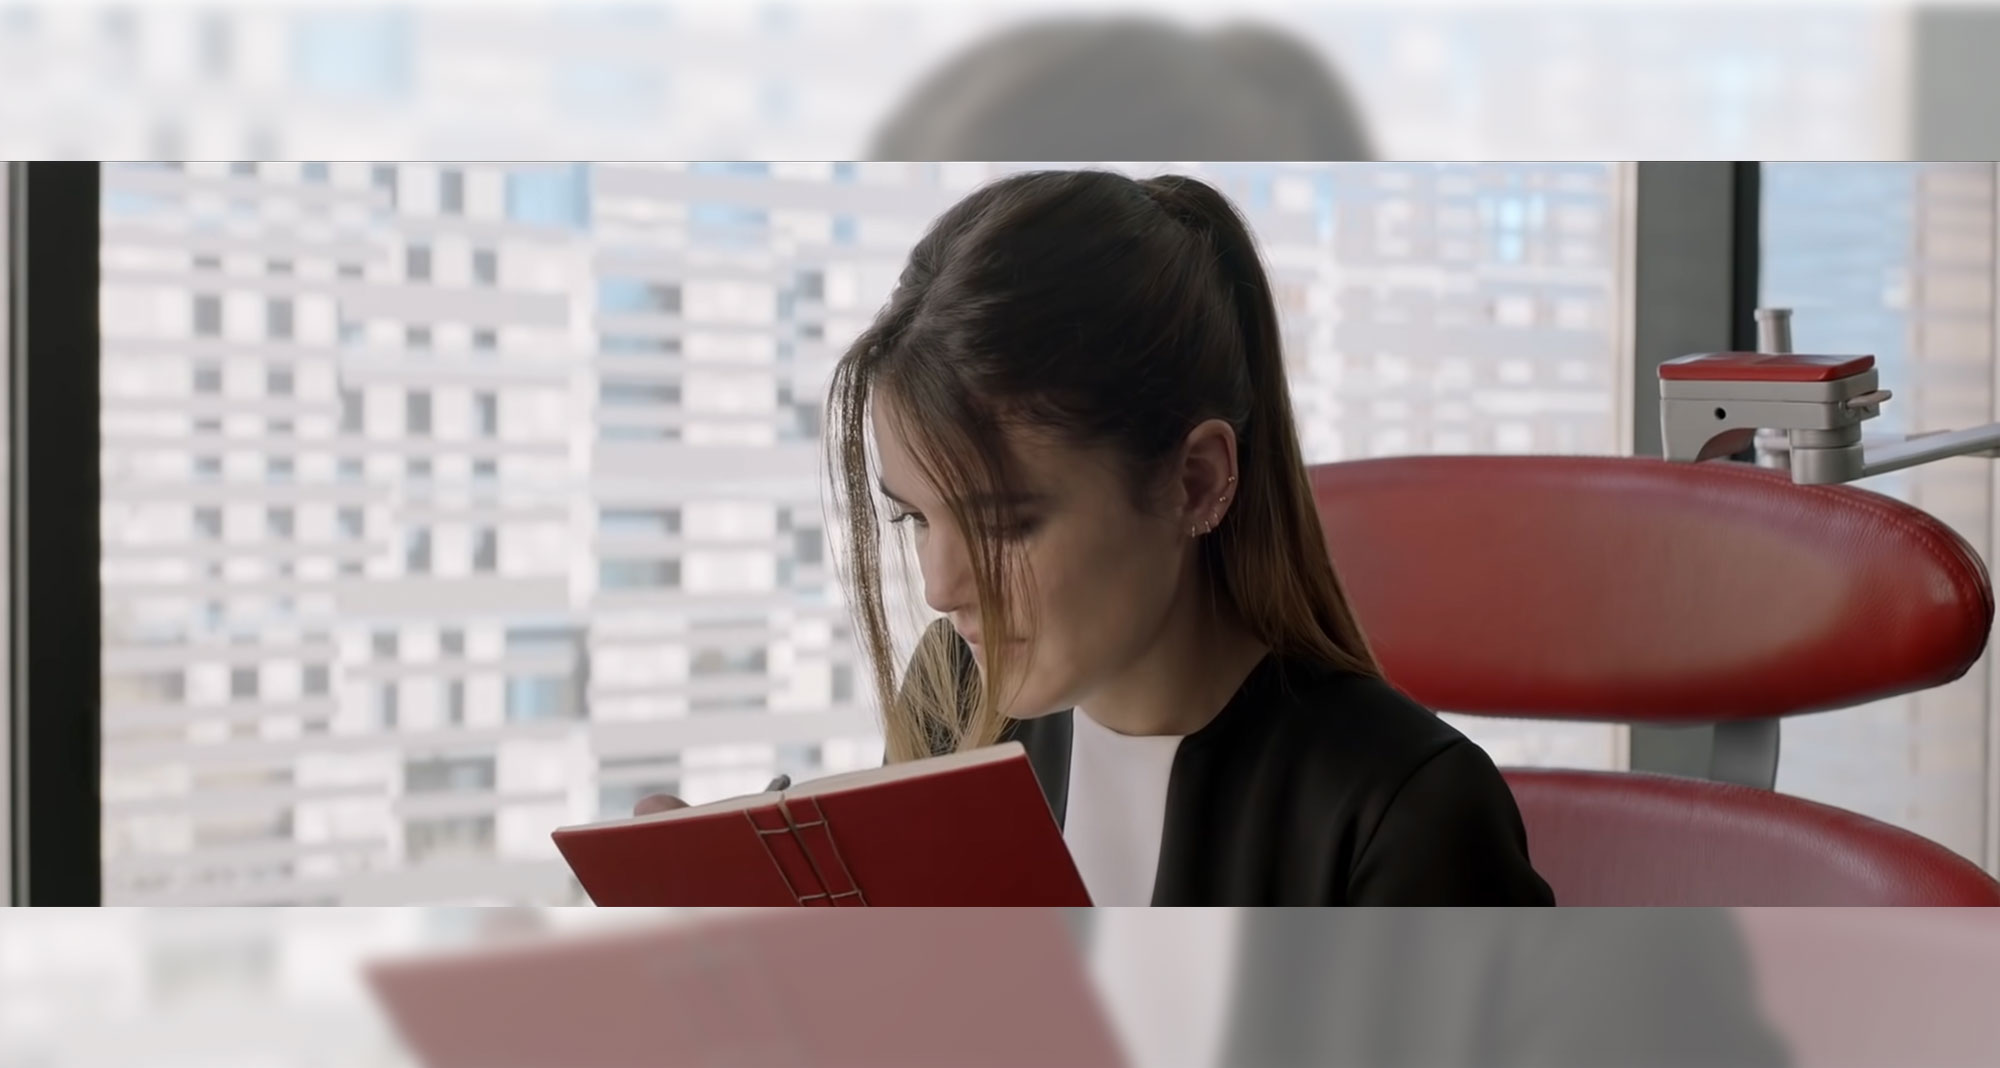 Beyond Money short film screenshot: Woman in chair writing in journal